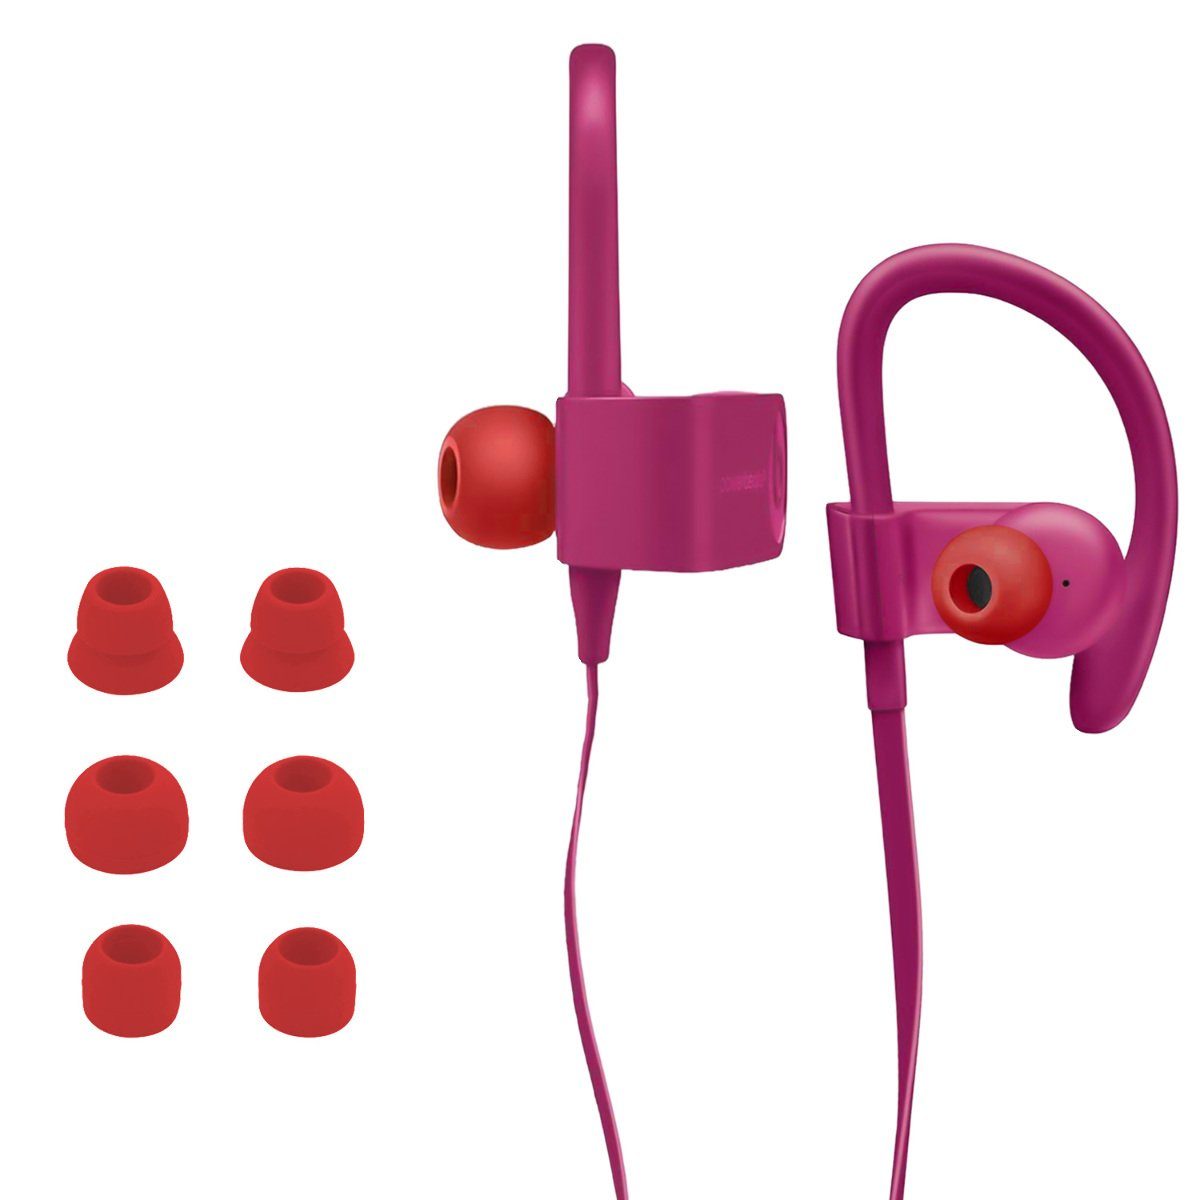 kwmobile 8x Polster für Beats Powerbeats 2 / 3 Wireless / Pro Ohrpolster (3 Größen + 1x Doppelstöpsel - Silikon Ohrstöpsel für In-Ear Headphones)